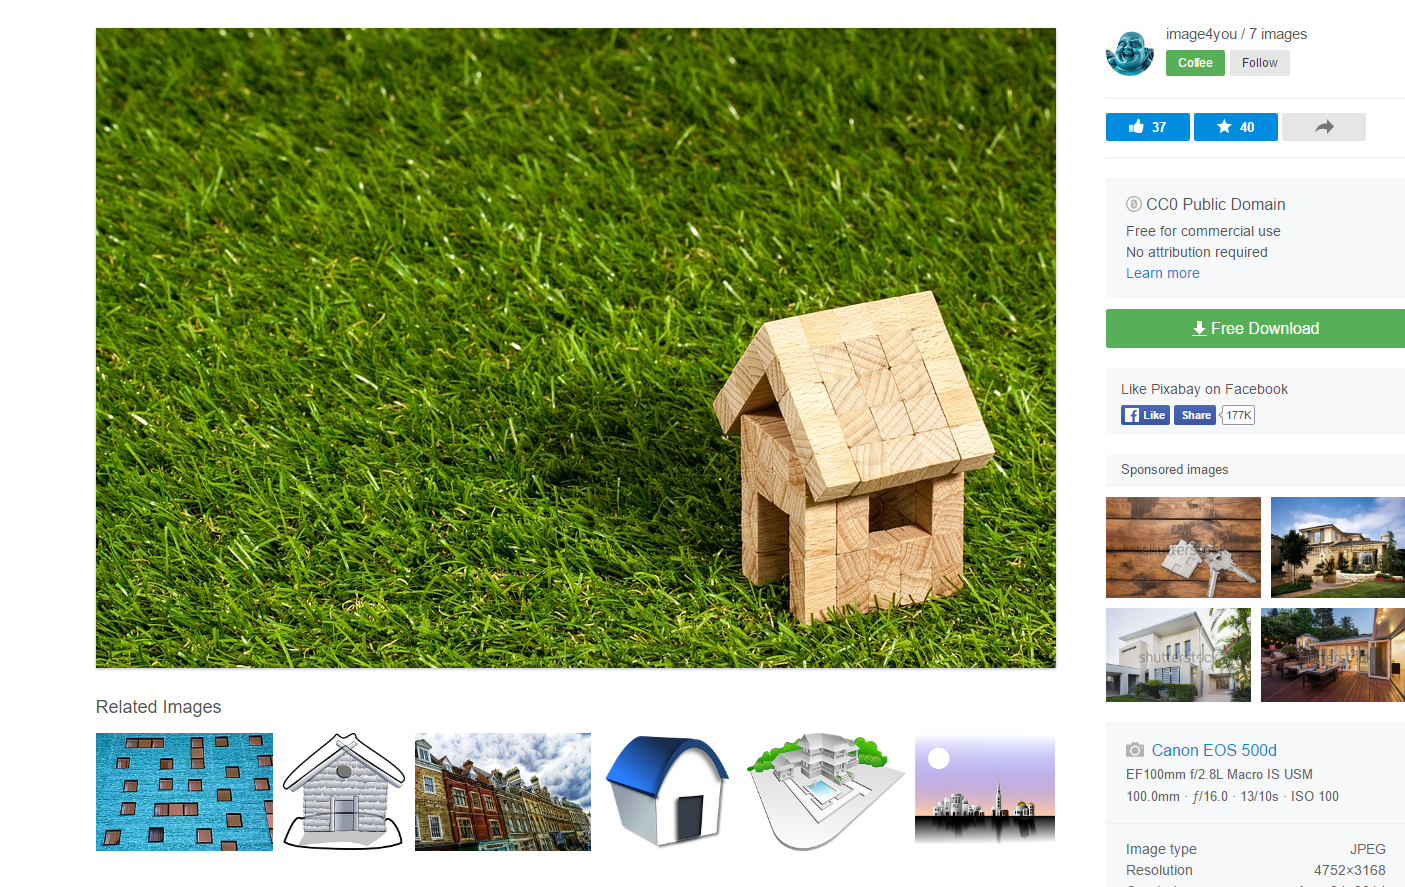 Free real estate stock photo websites PLUS Copyright Infringement ...